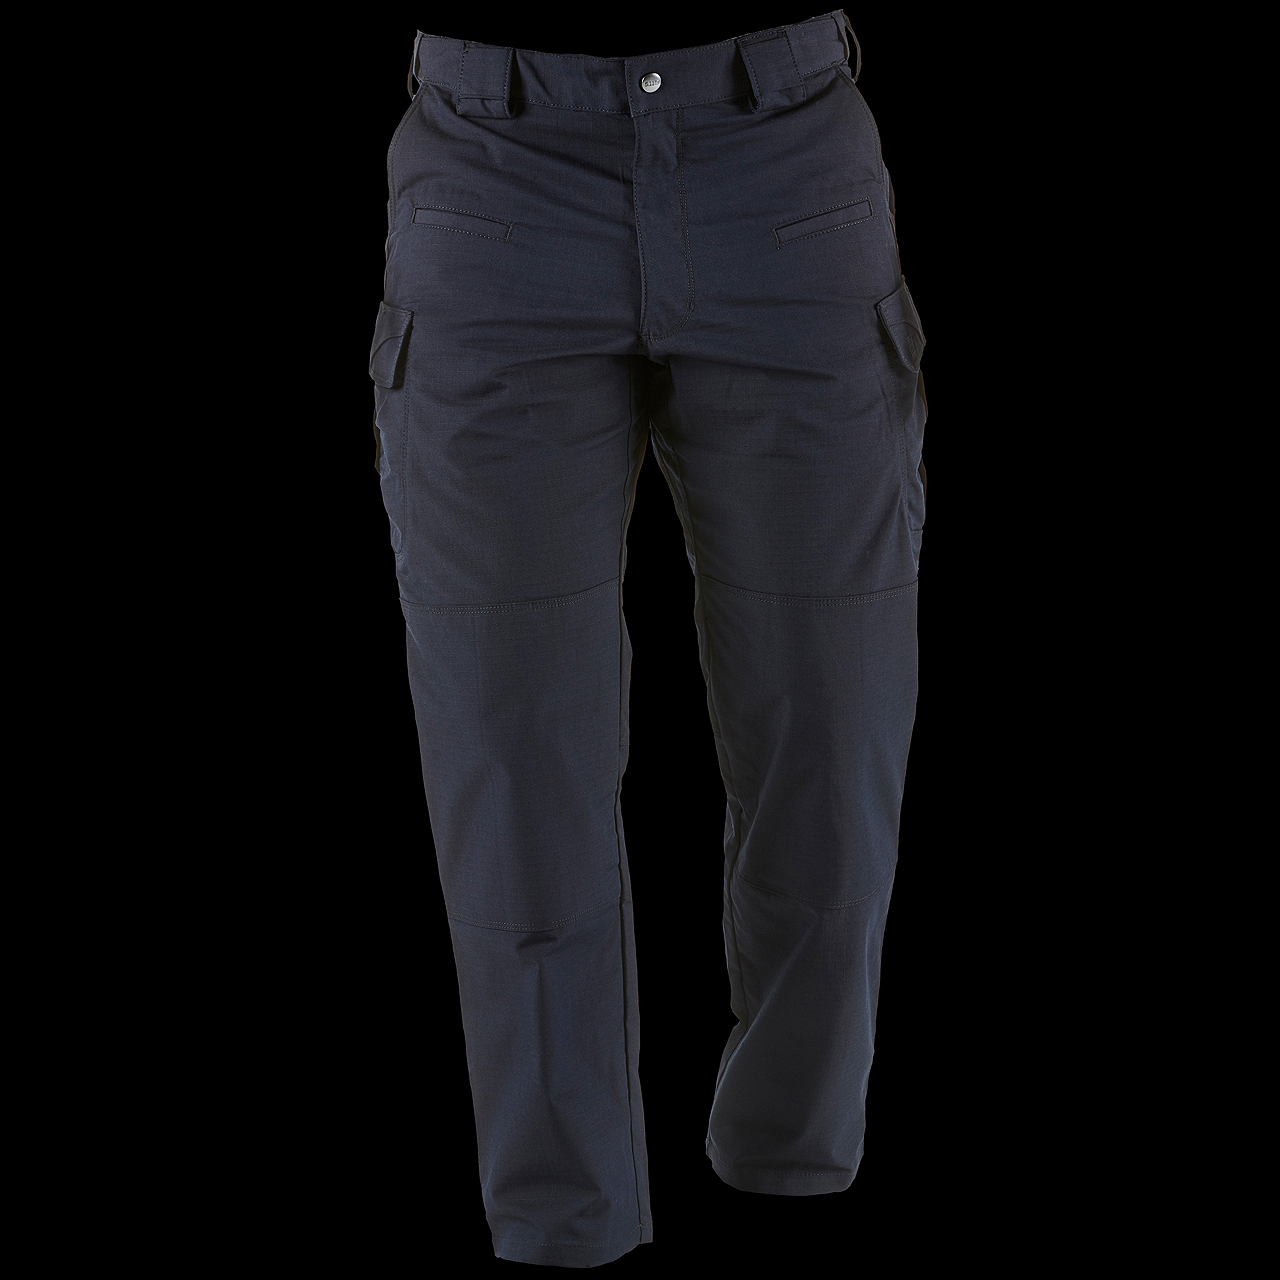 Mil-Tec Mens Pilot Trousers Poplin Cotton Pants Security Cargos Prewashed  Black | eBay